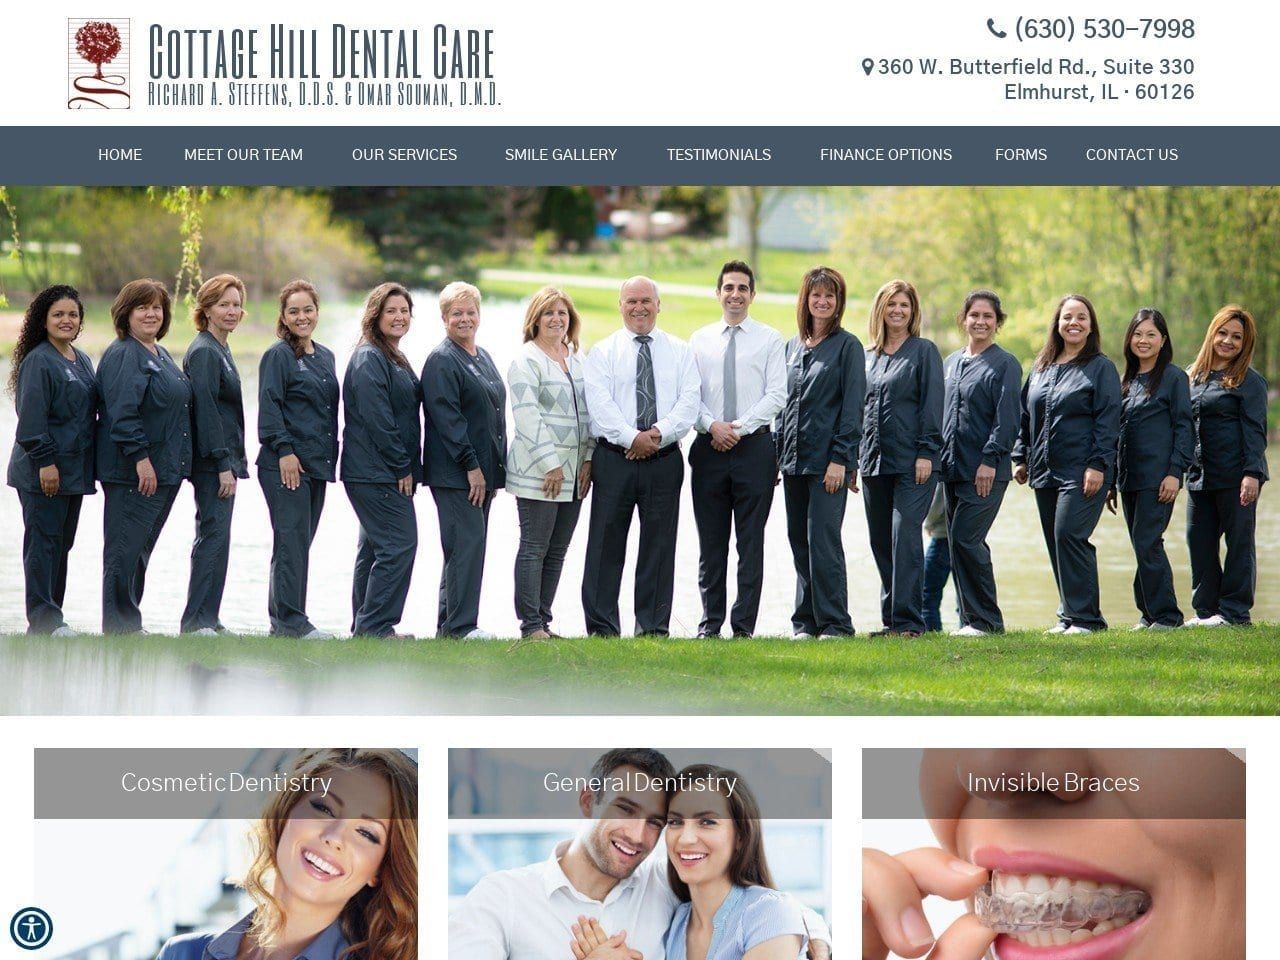 Cottage Hill Dental Care Website Screenshot from cottagehilldentalcare.com